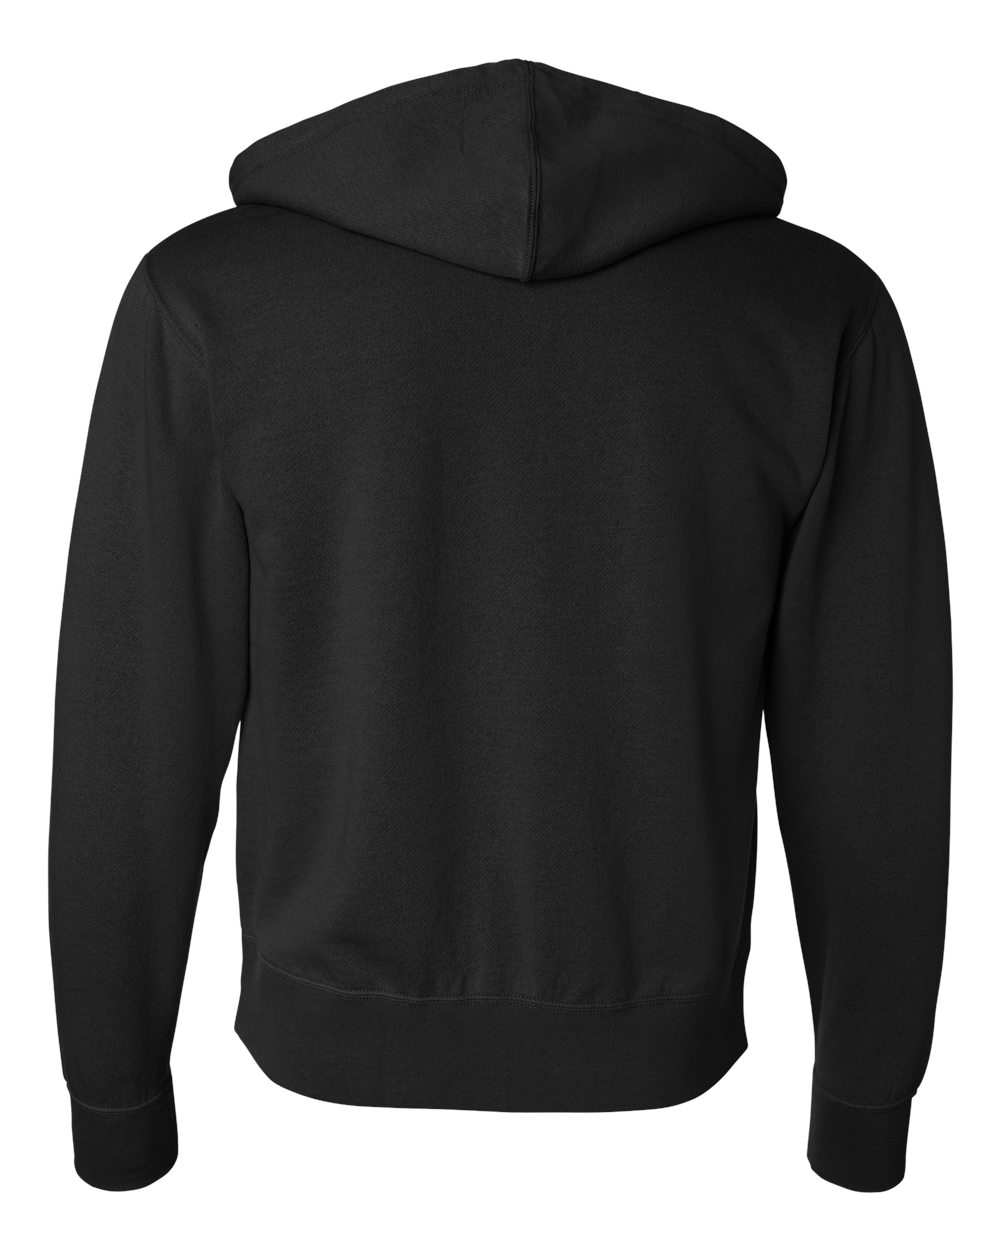 Lightweight Full-Zip Hooded Sweatshirt - Independent Trading Co